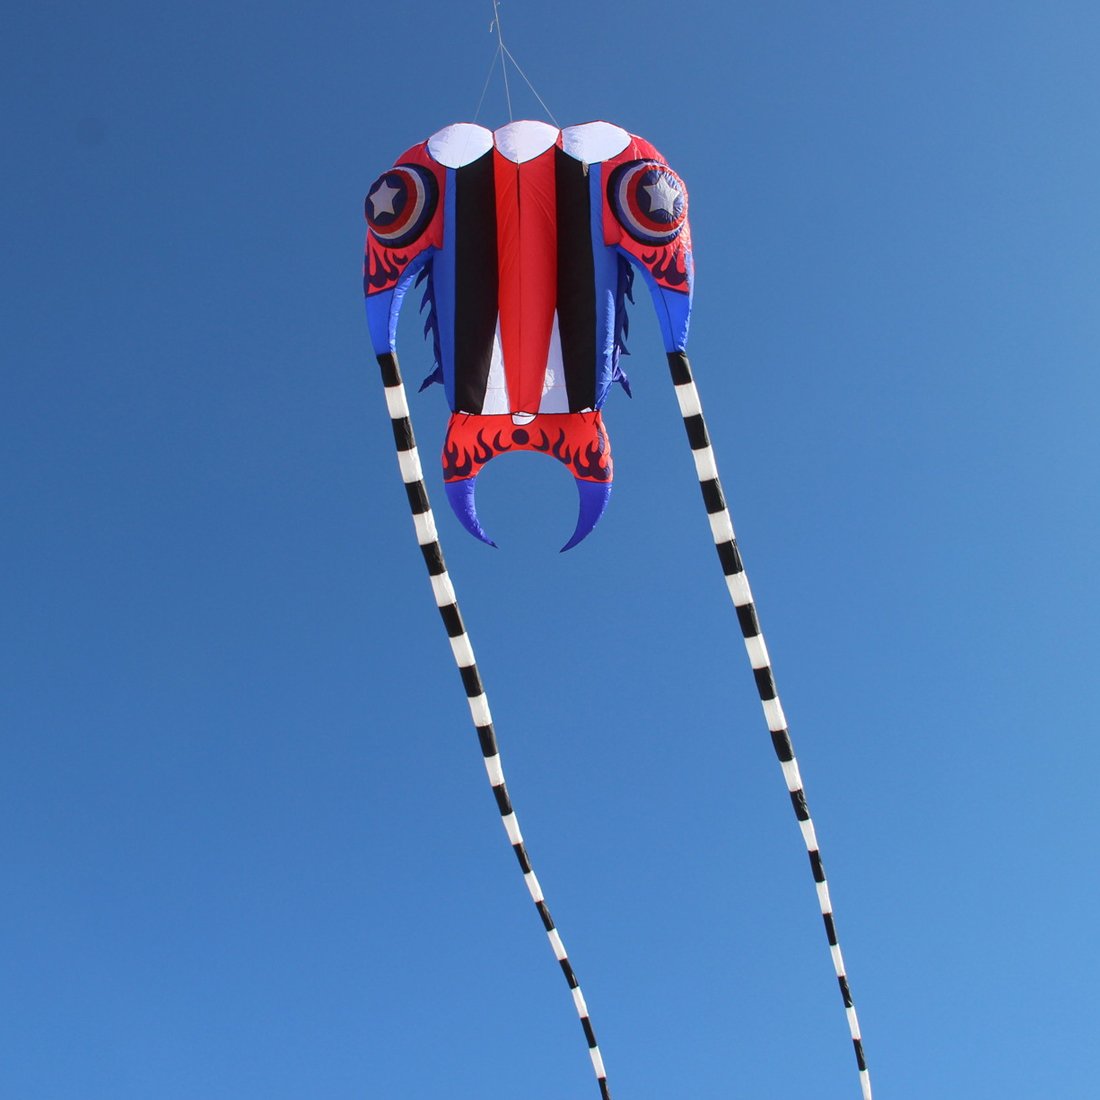 7㎡~16㎡ Trilobite Kite Large Single Line Parafoil Kite Line Laundry Soft Inflatable Kite 30D Ripstop Nylon with Bag